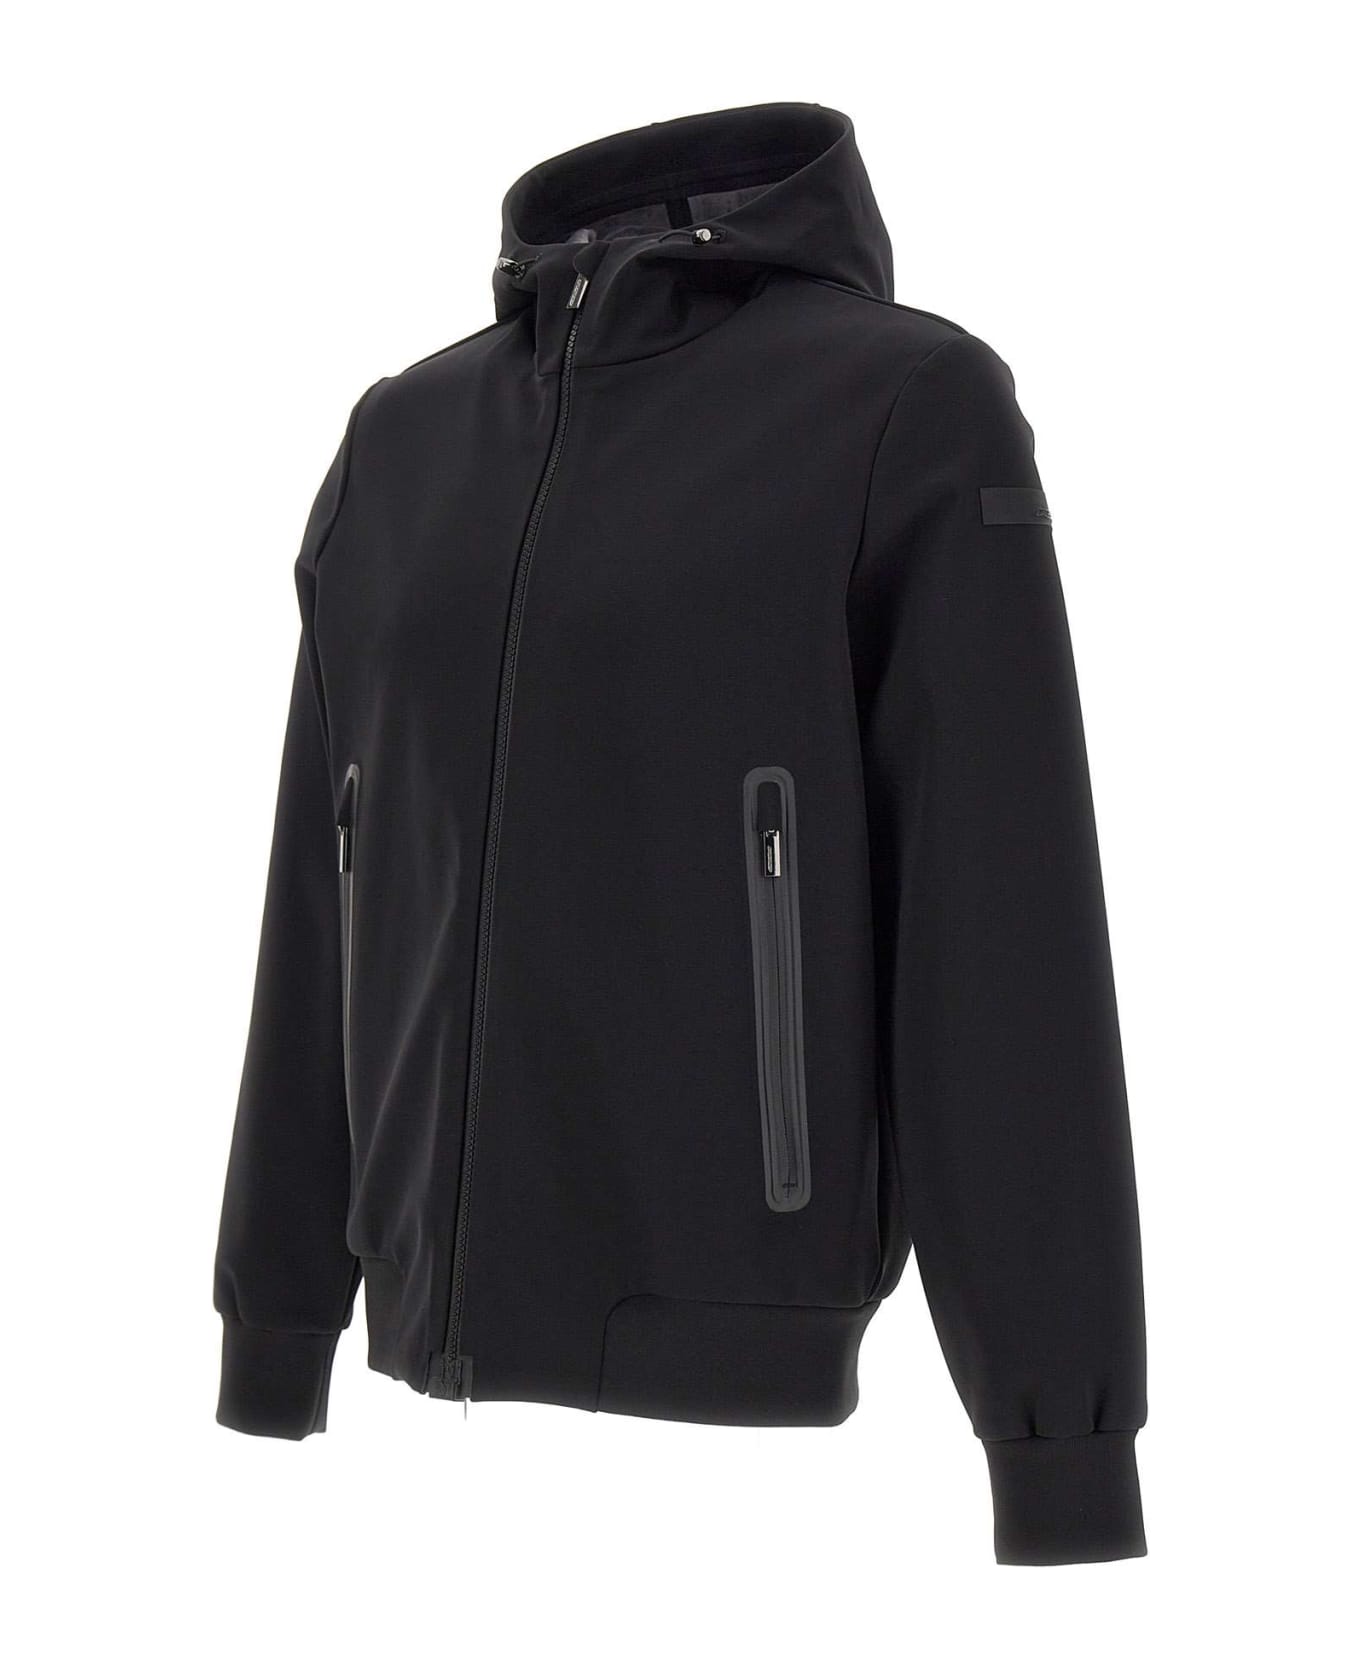 RRD - Roberto Ricci Design 'winter Thermo Hood' Jacket - Black ジャケット